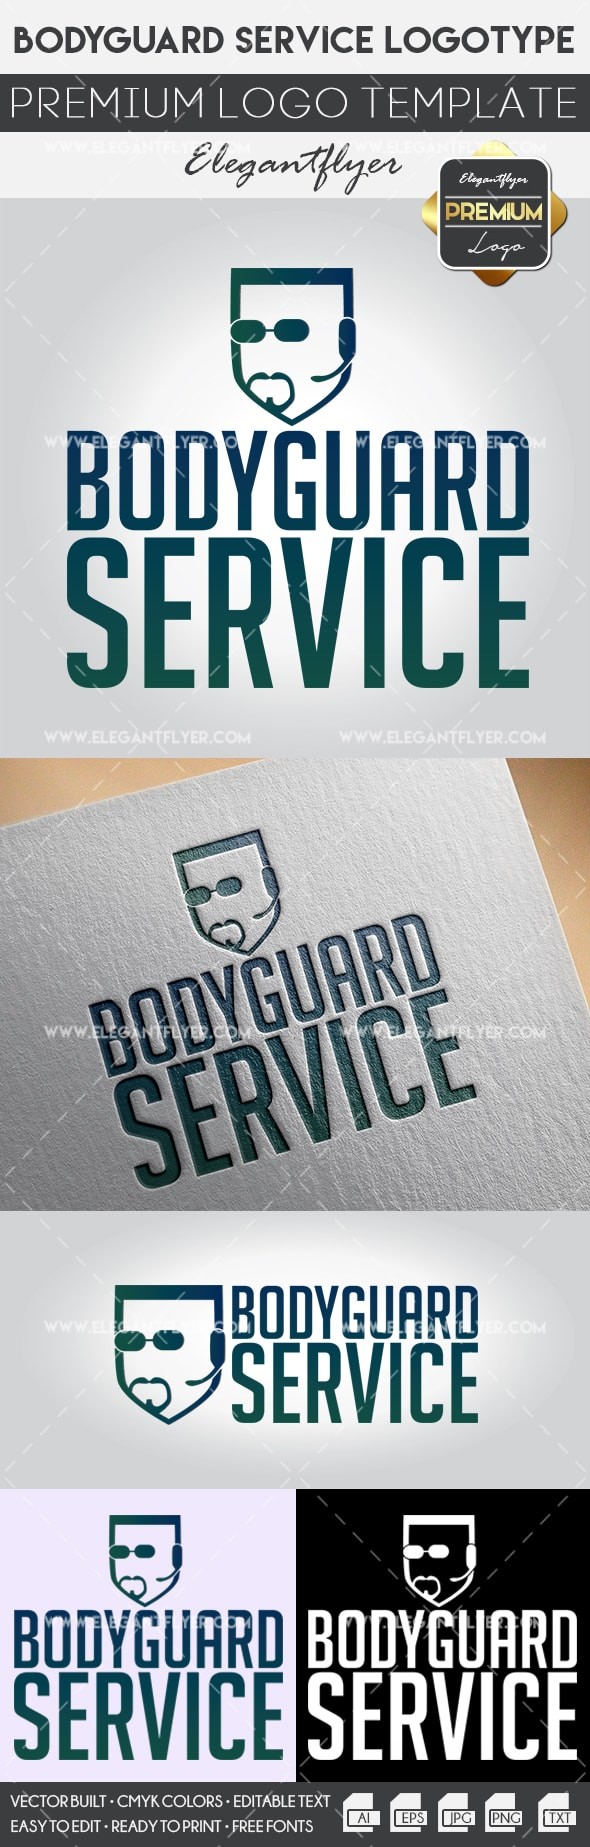 Bodyguard-Service by ElegantFlyer